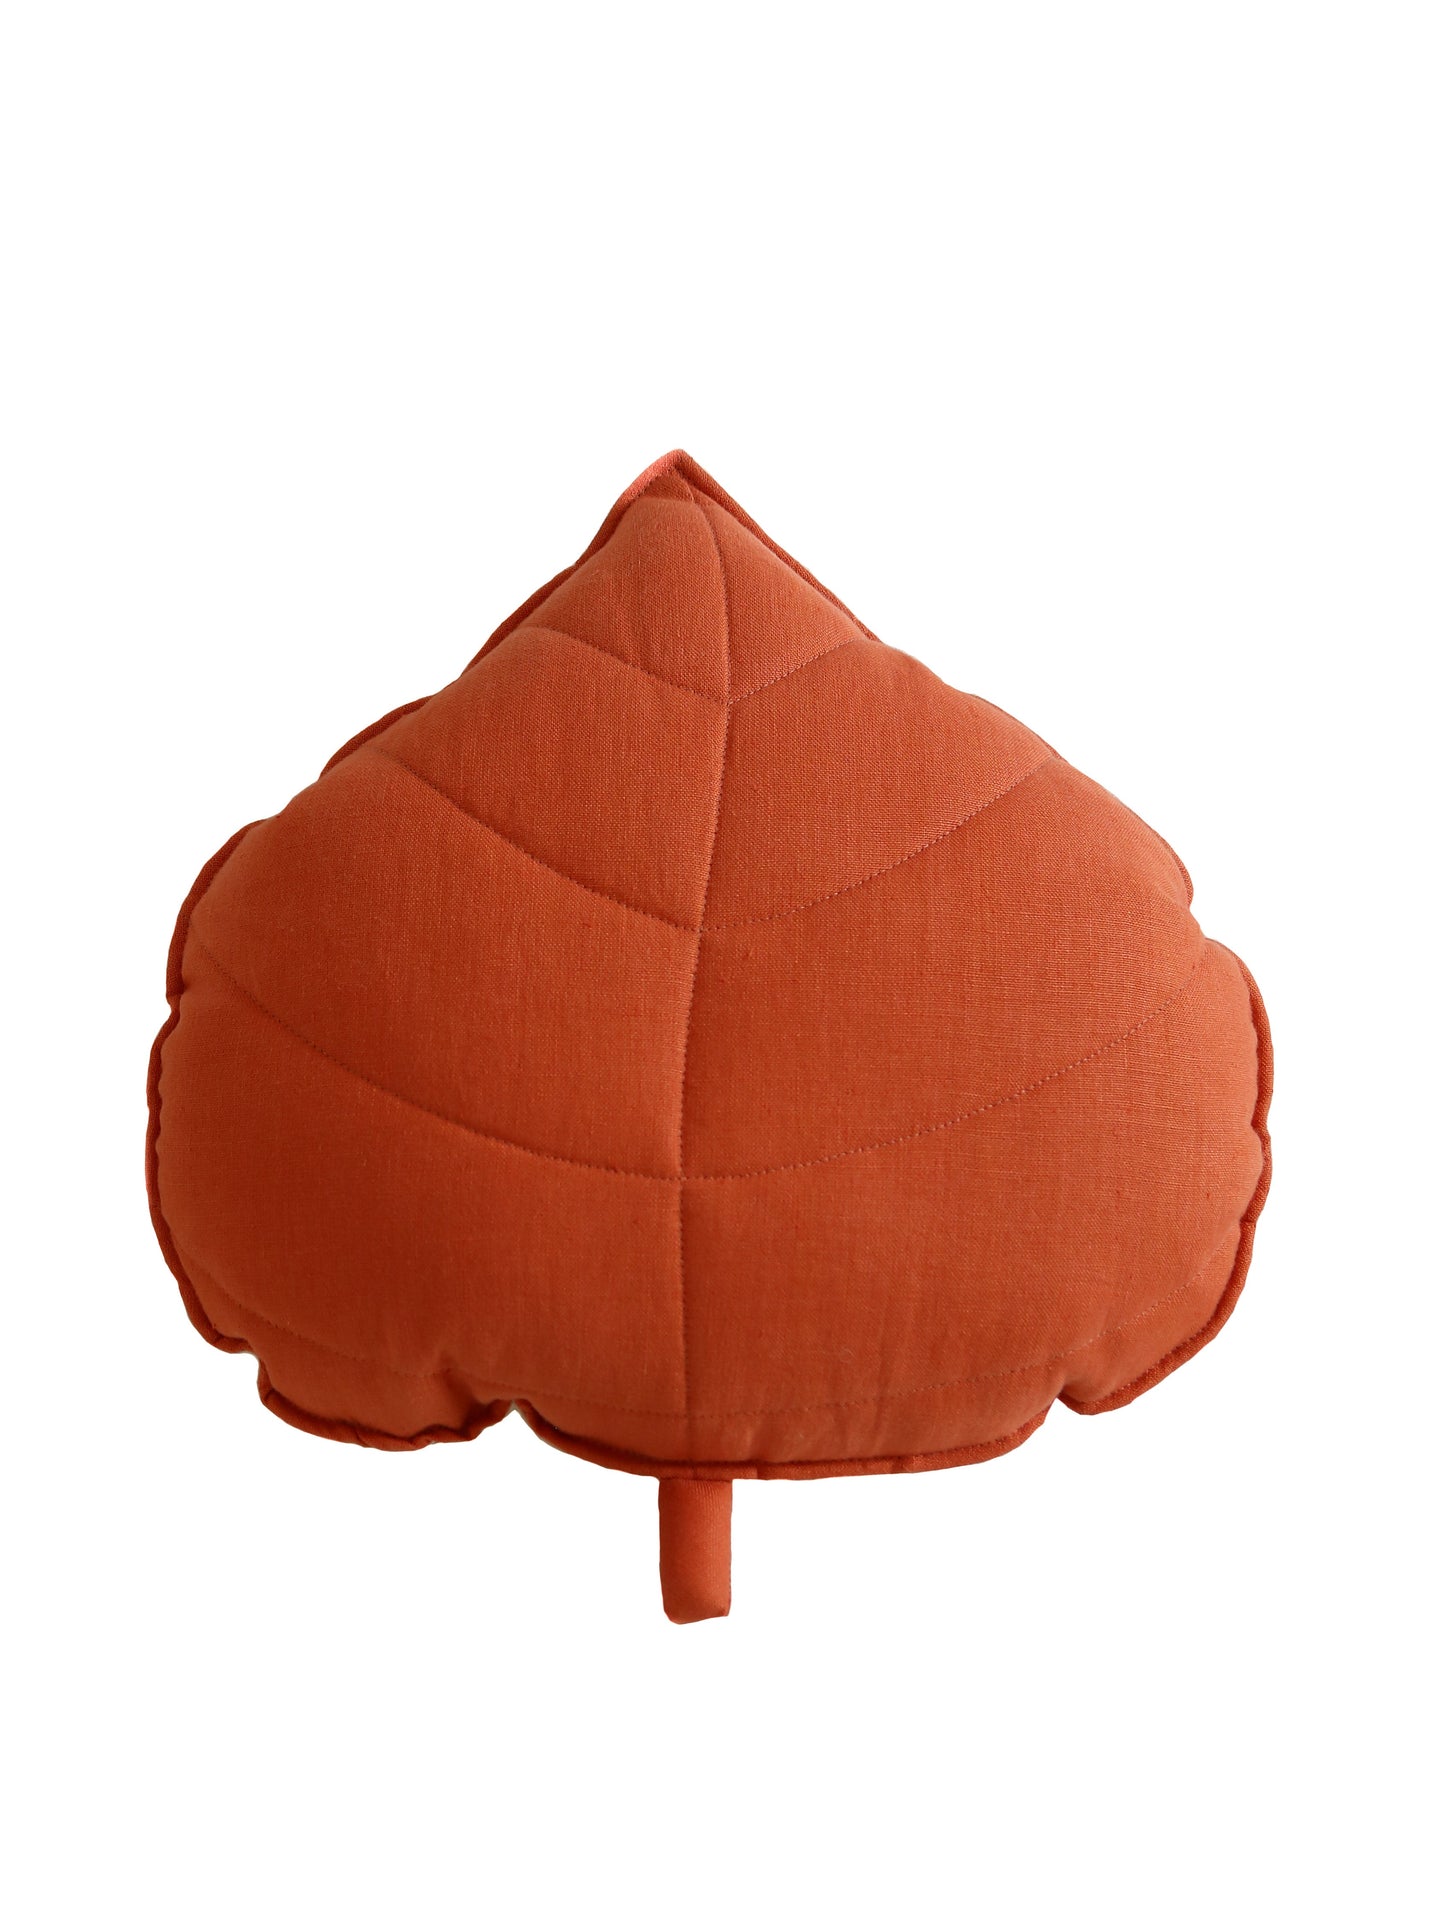 Linen “Papaya” Leaf Pillow